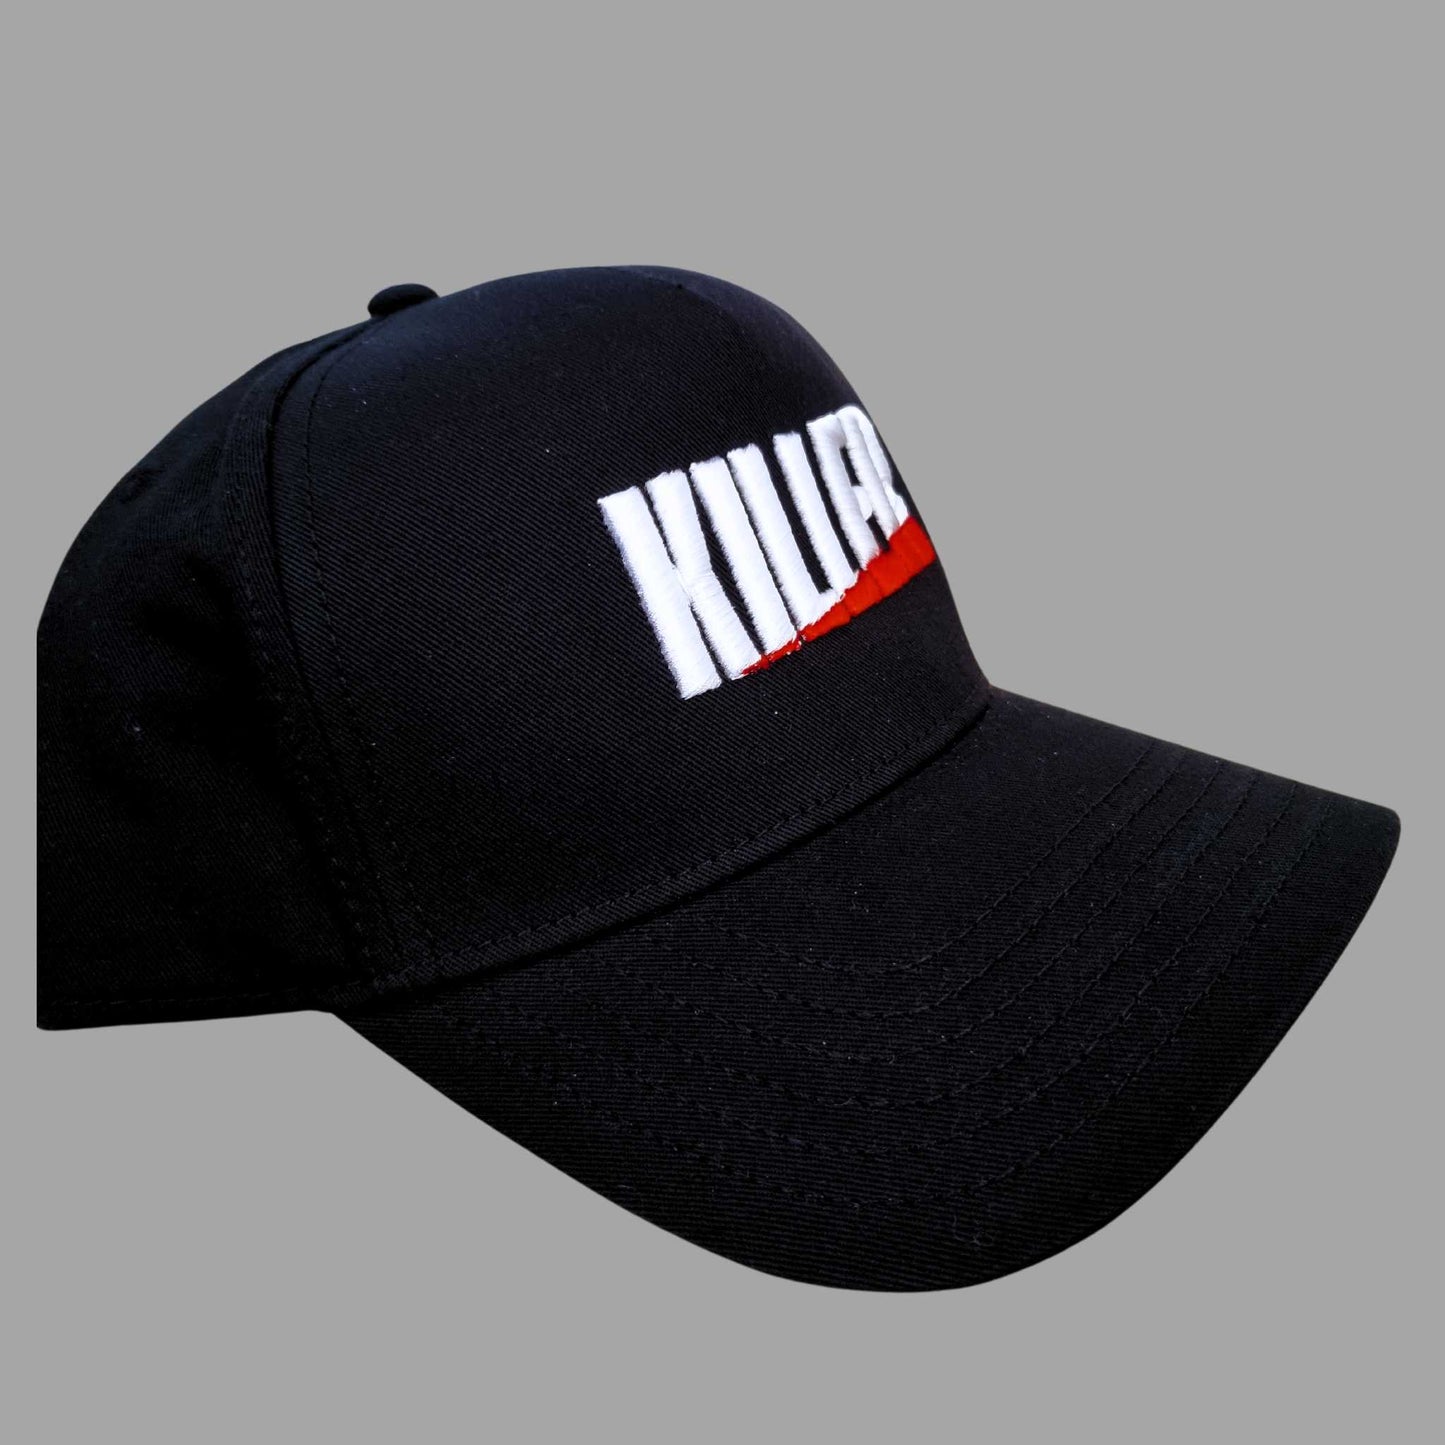 Killer Hat